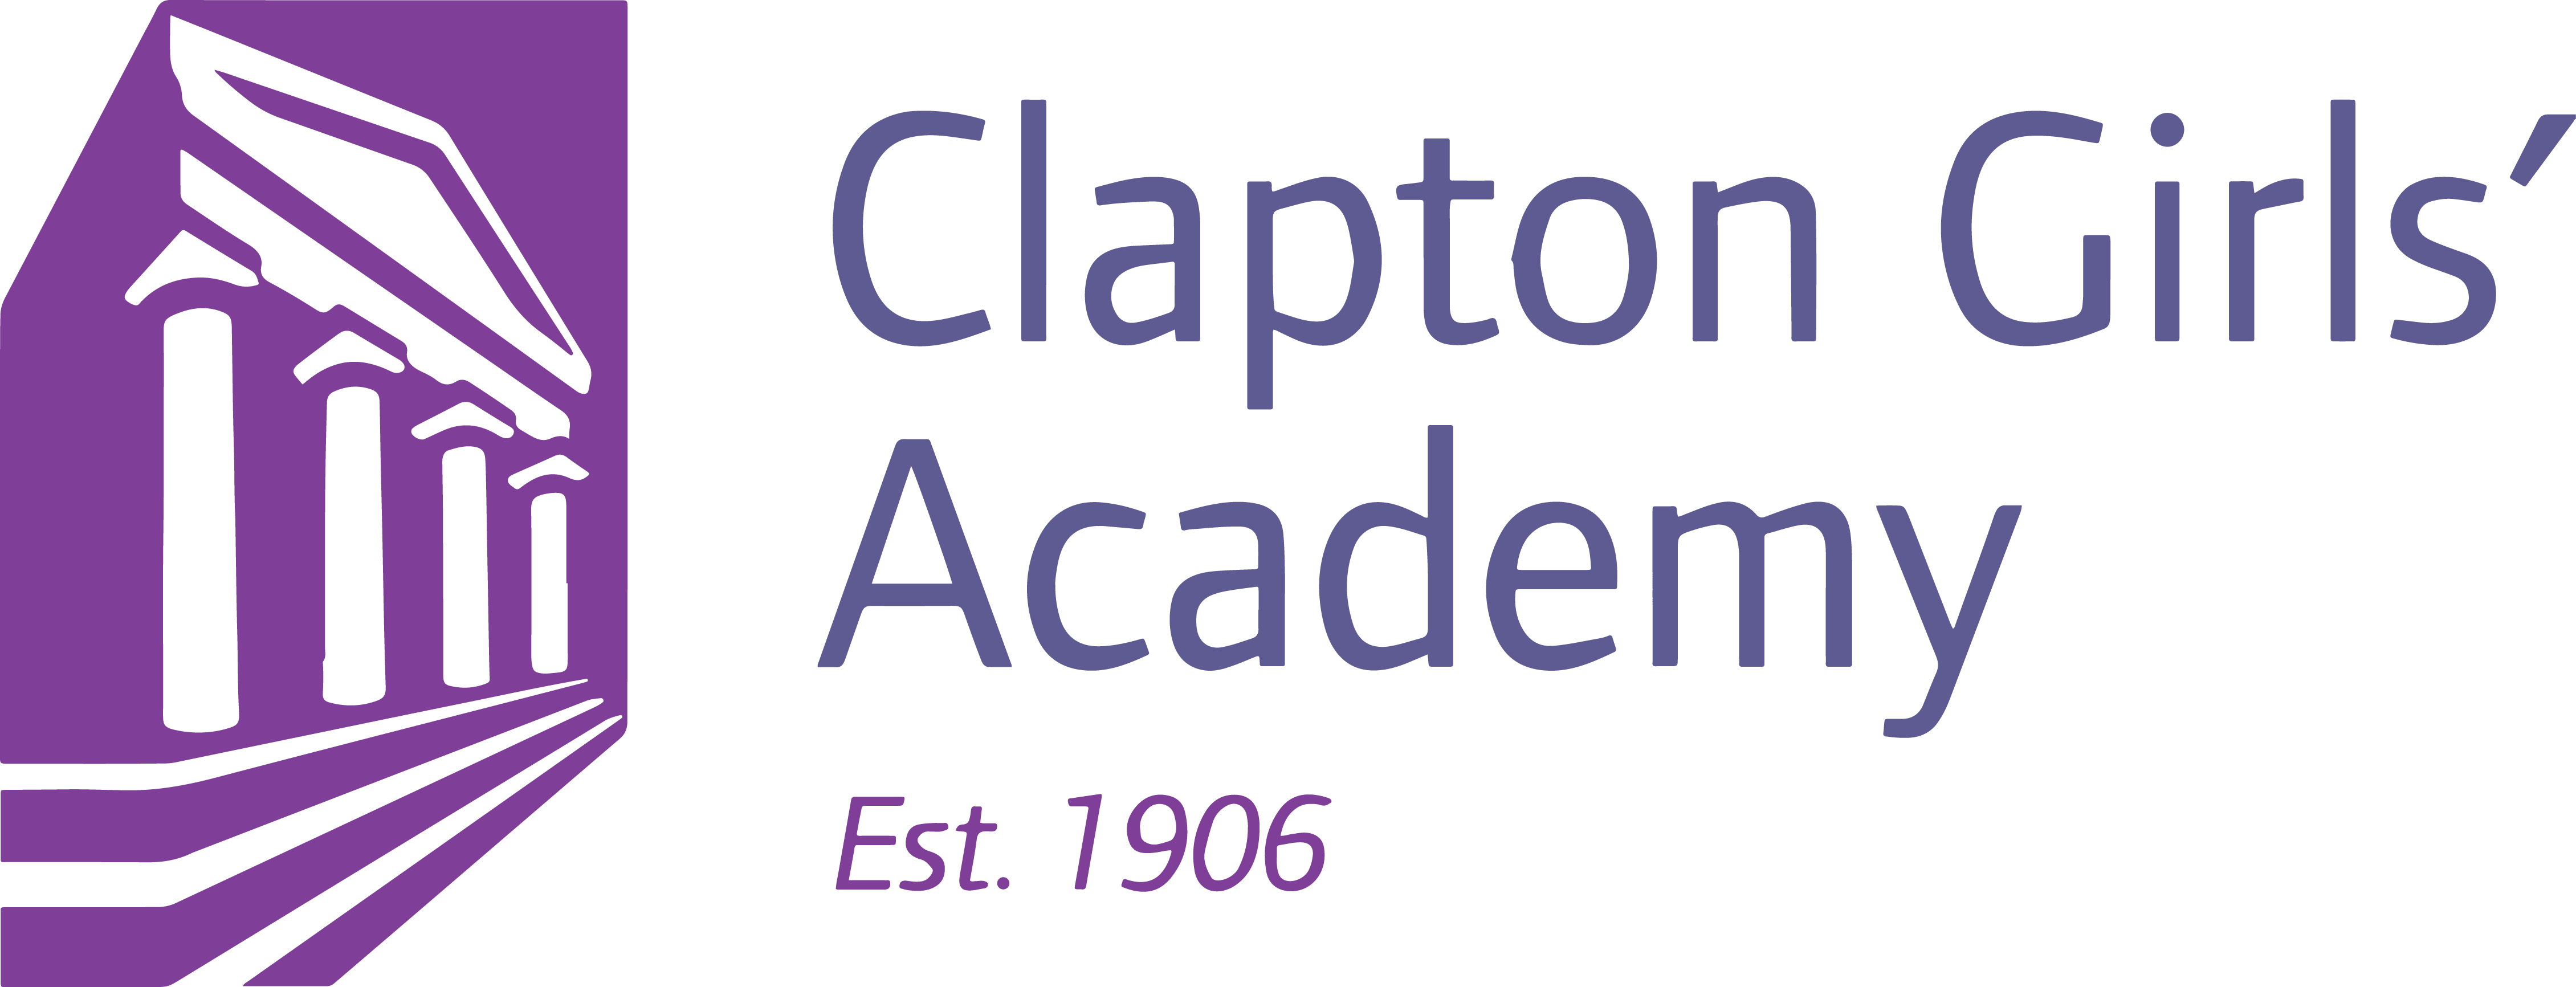 Clapton Girls Academy